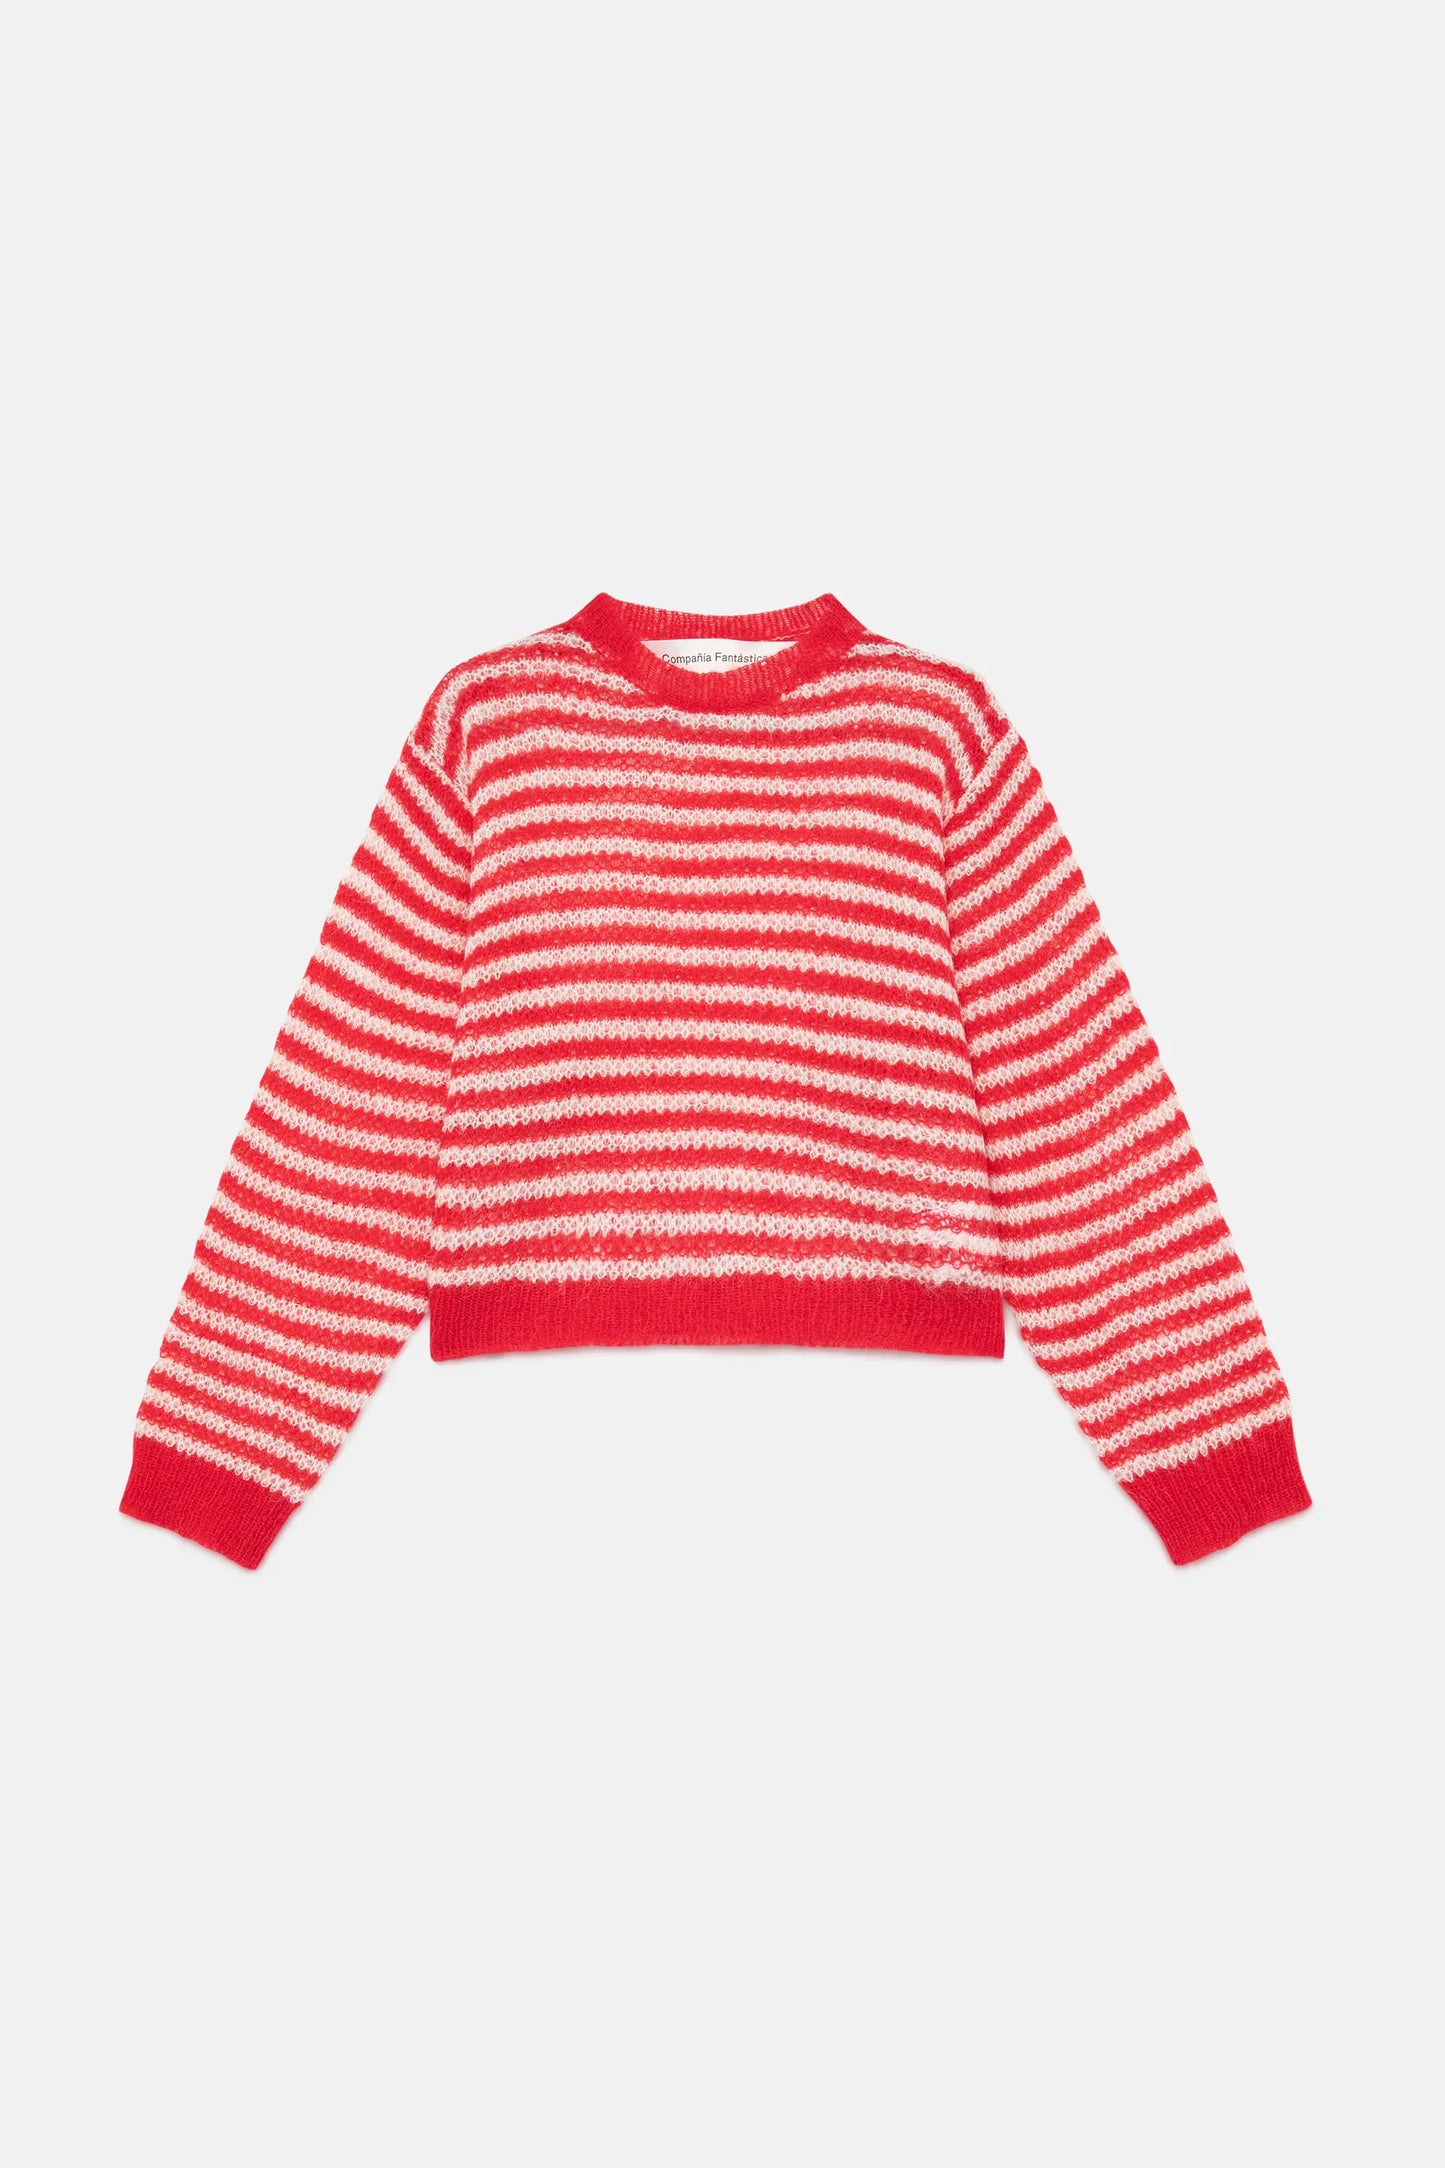 Jersey de niña punto trenzado rayas rojo